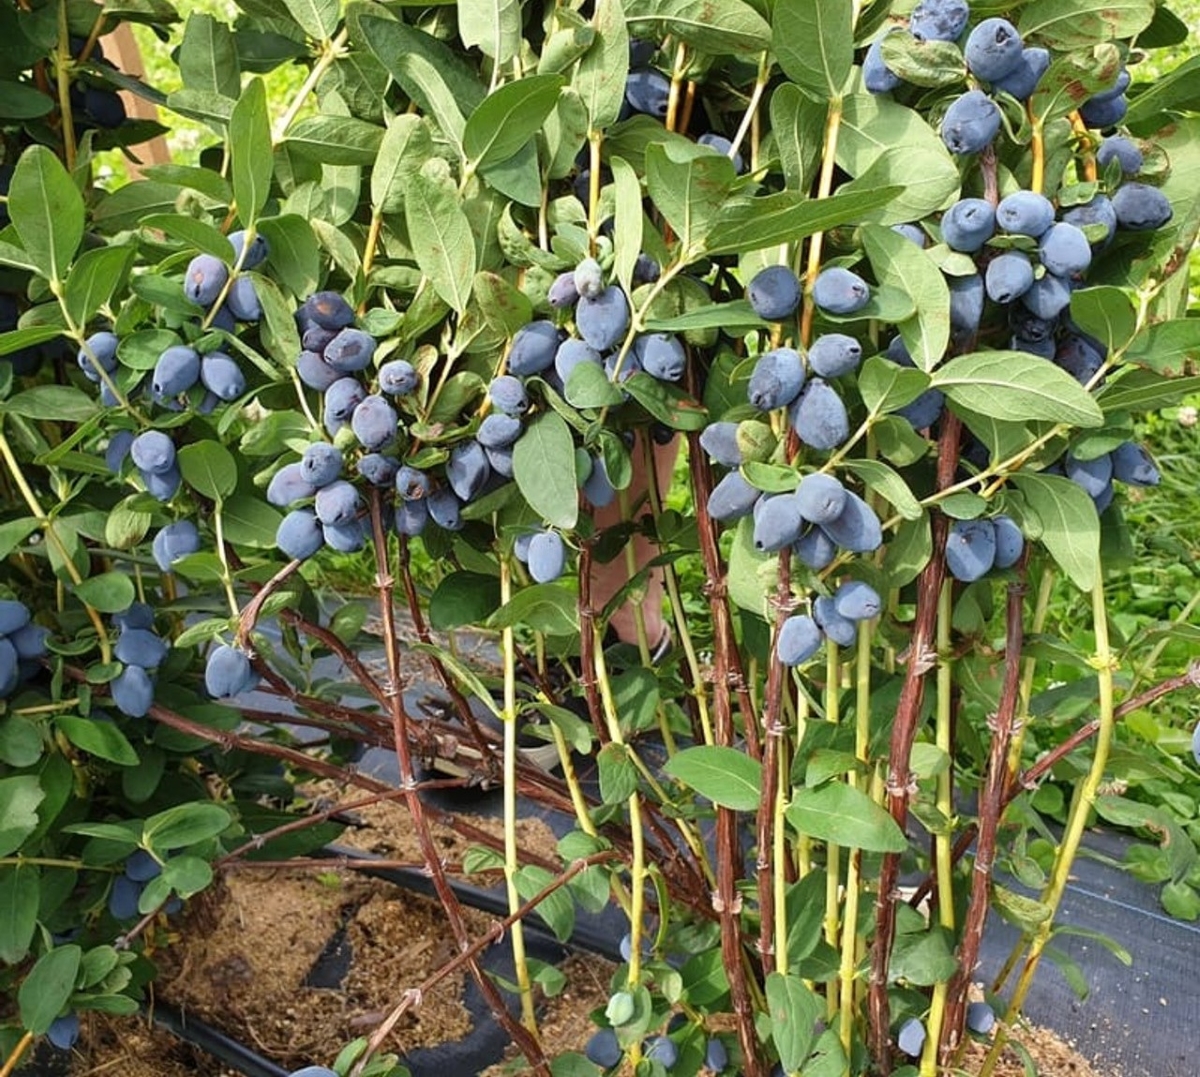 Large blue tubular berries on bush